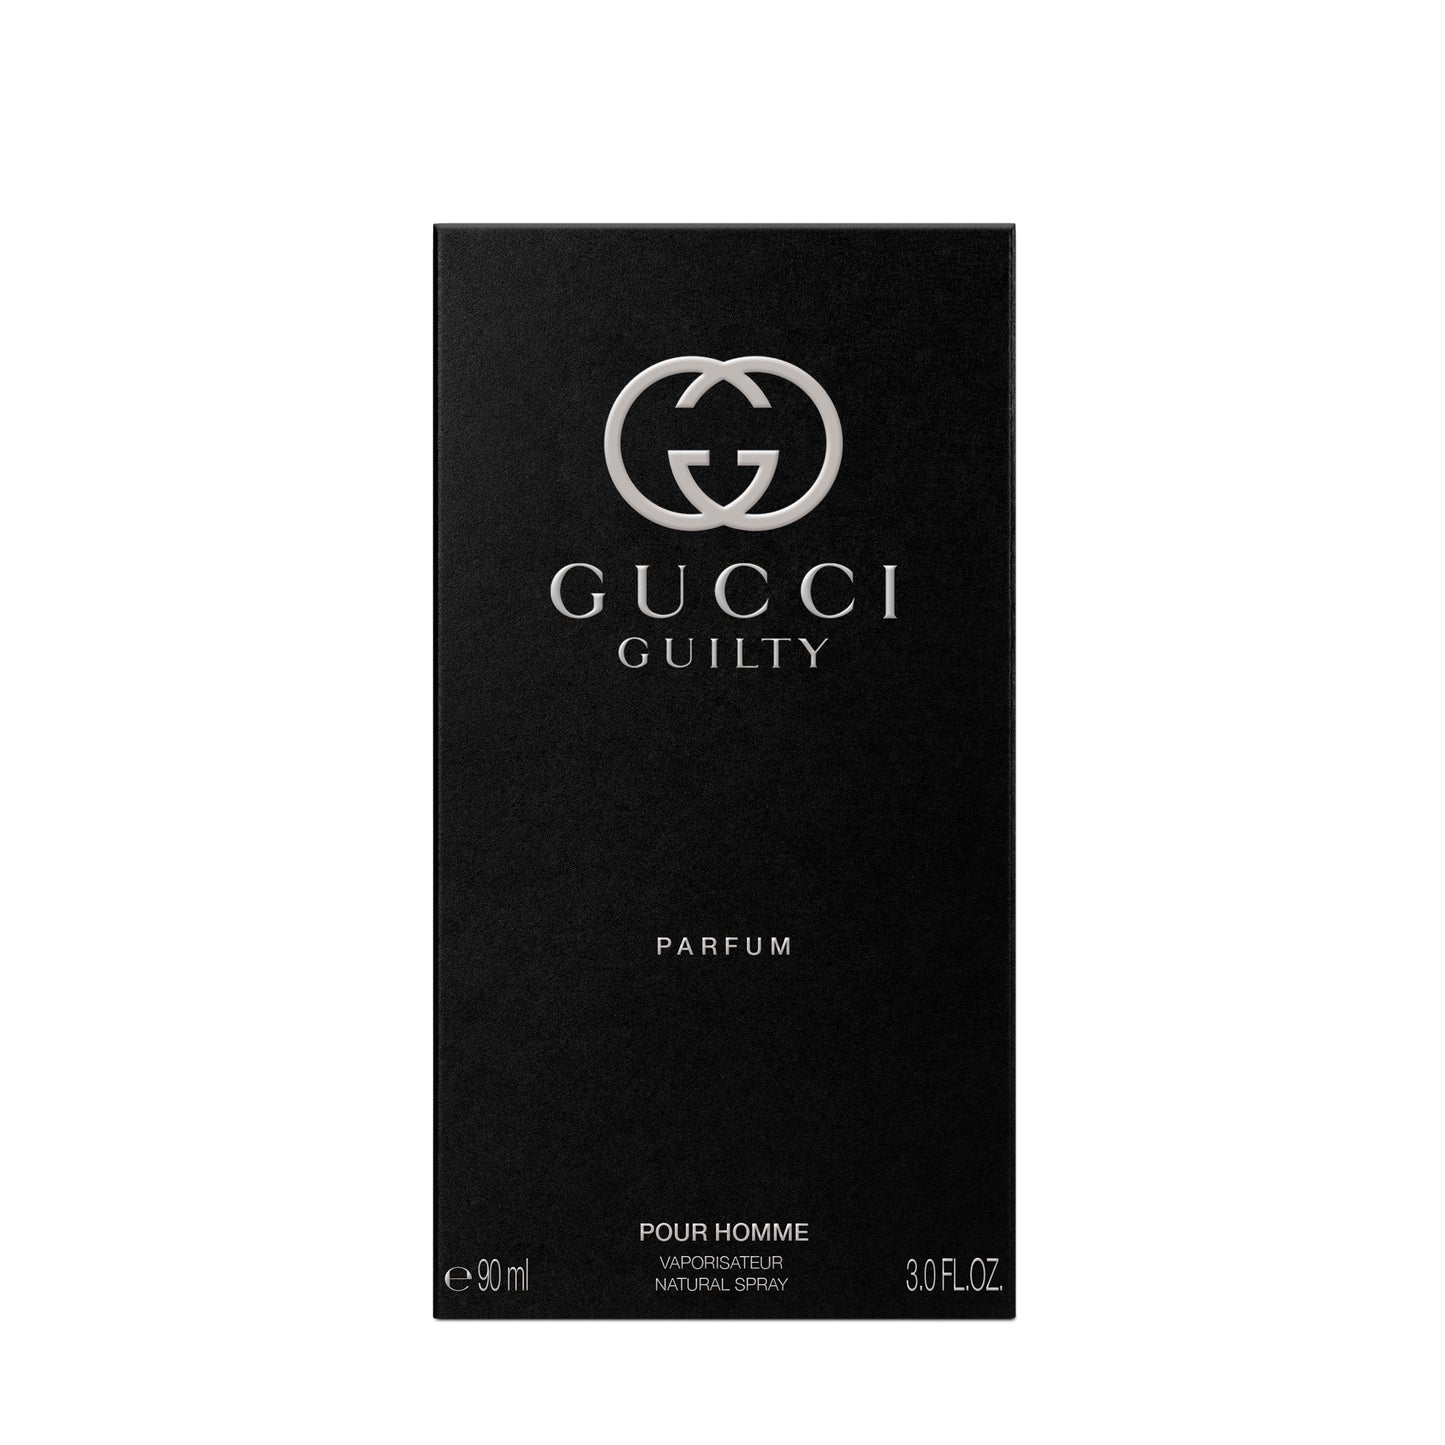 Gucci Guilty Parfum